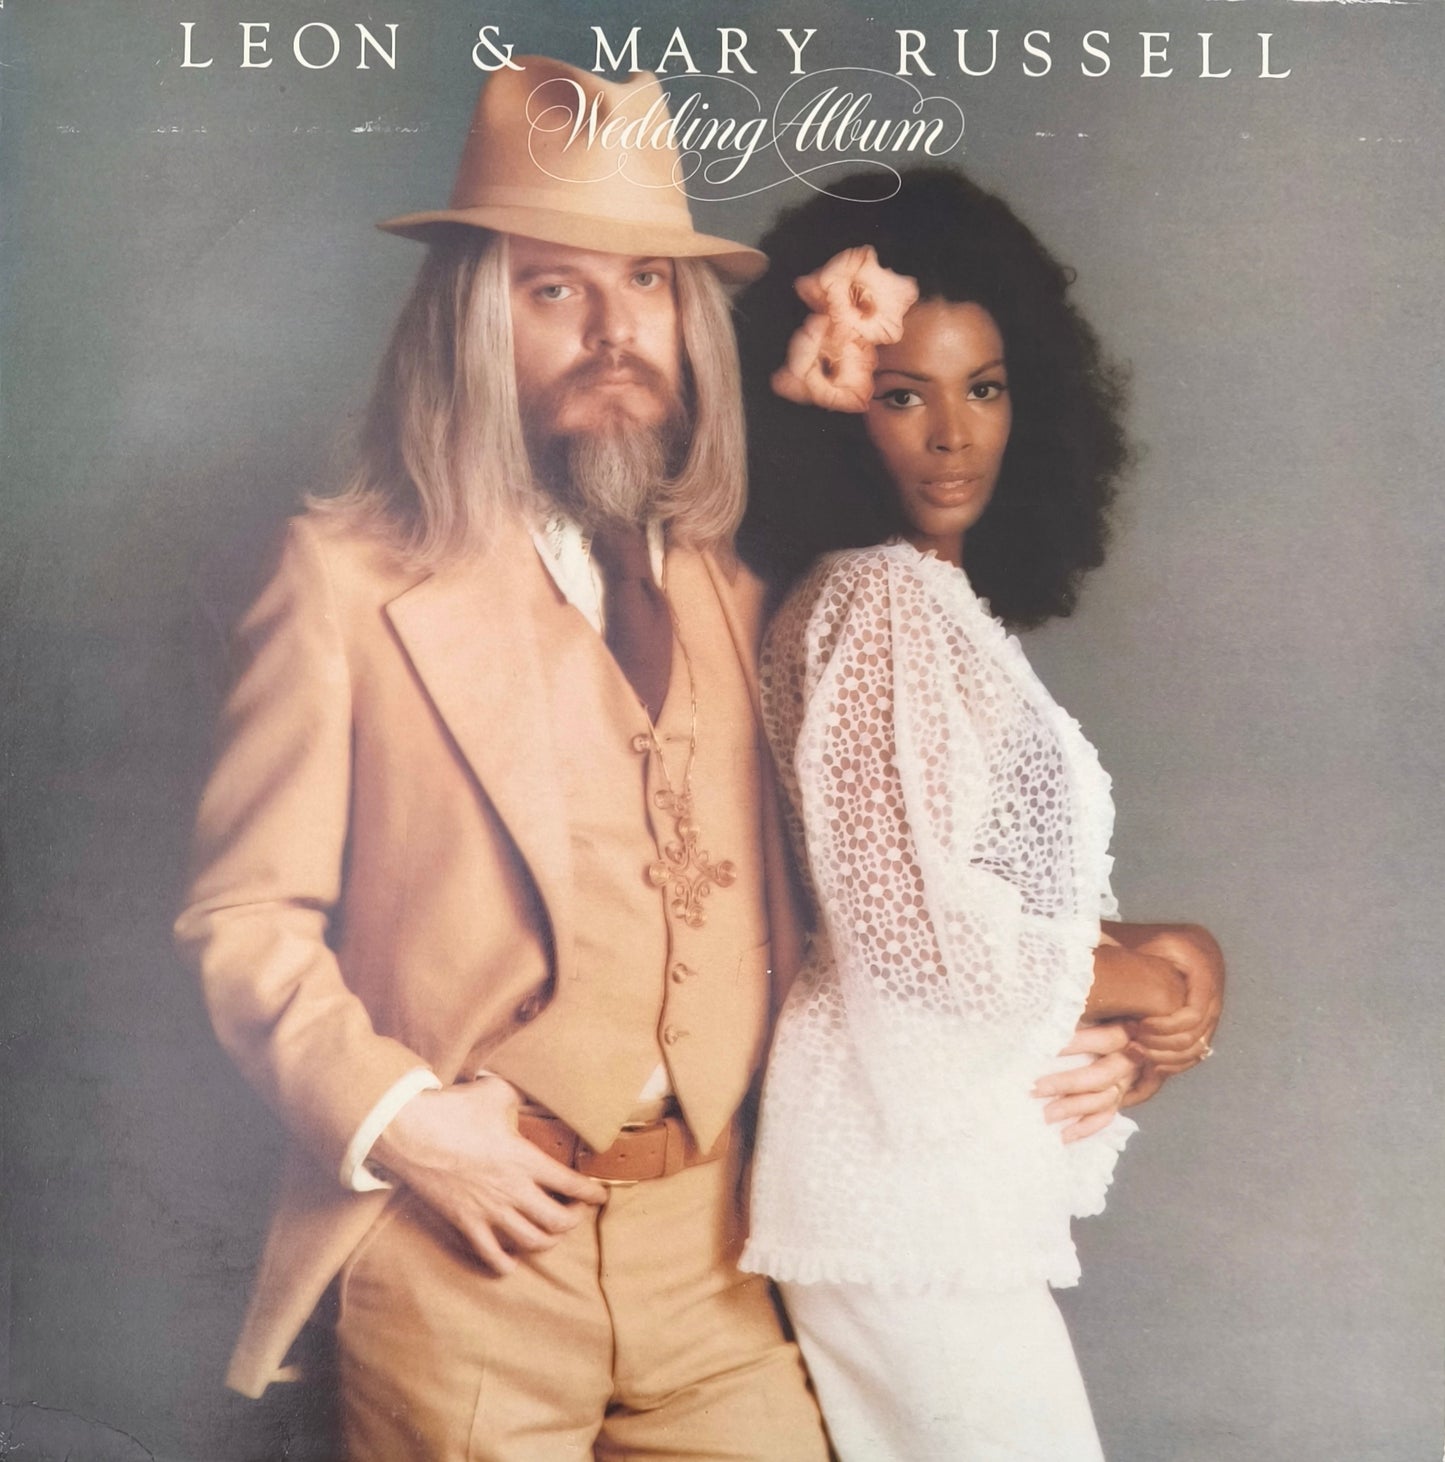 LEON & MARY RUSSELL - Wedding Album